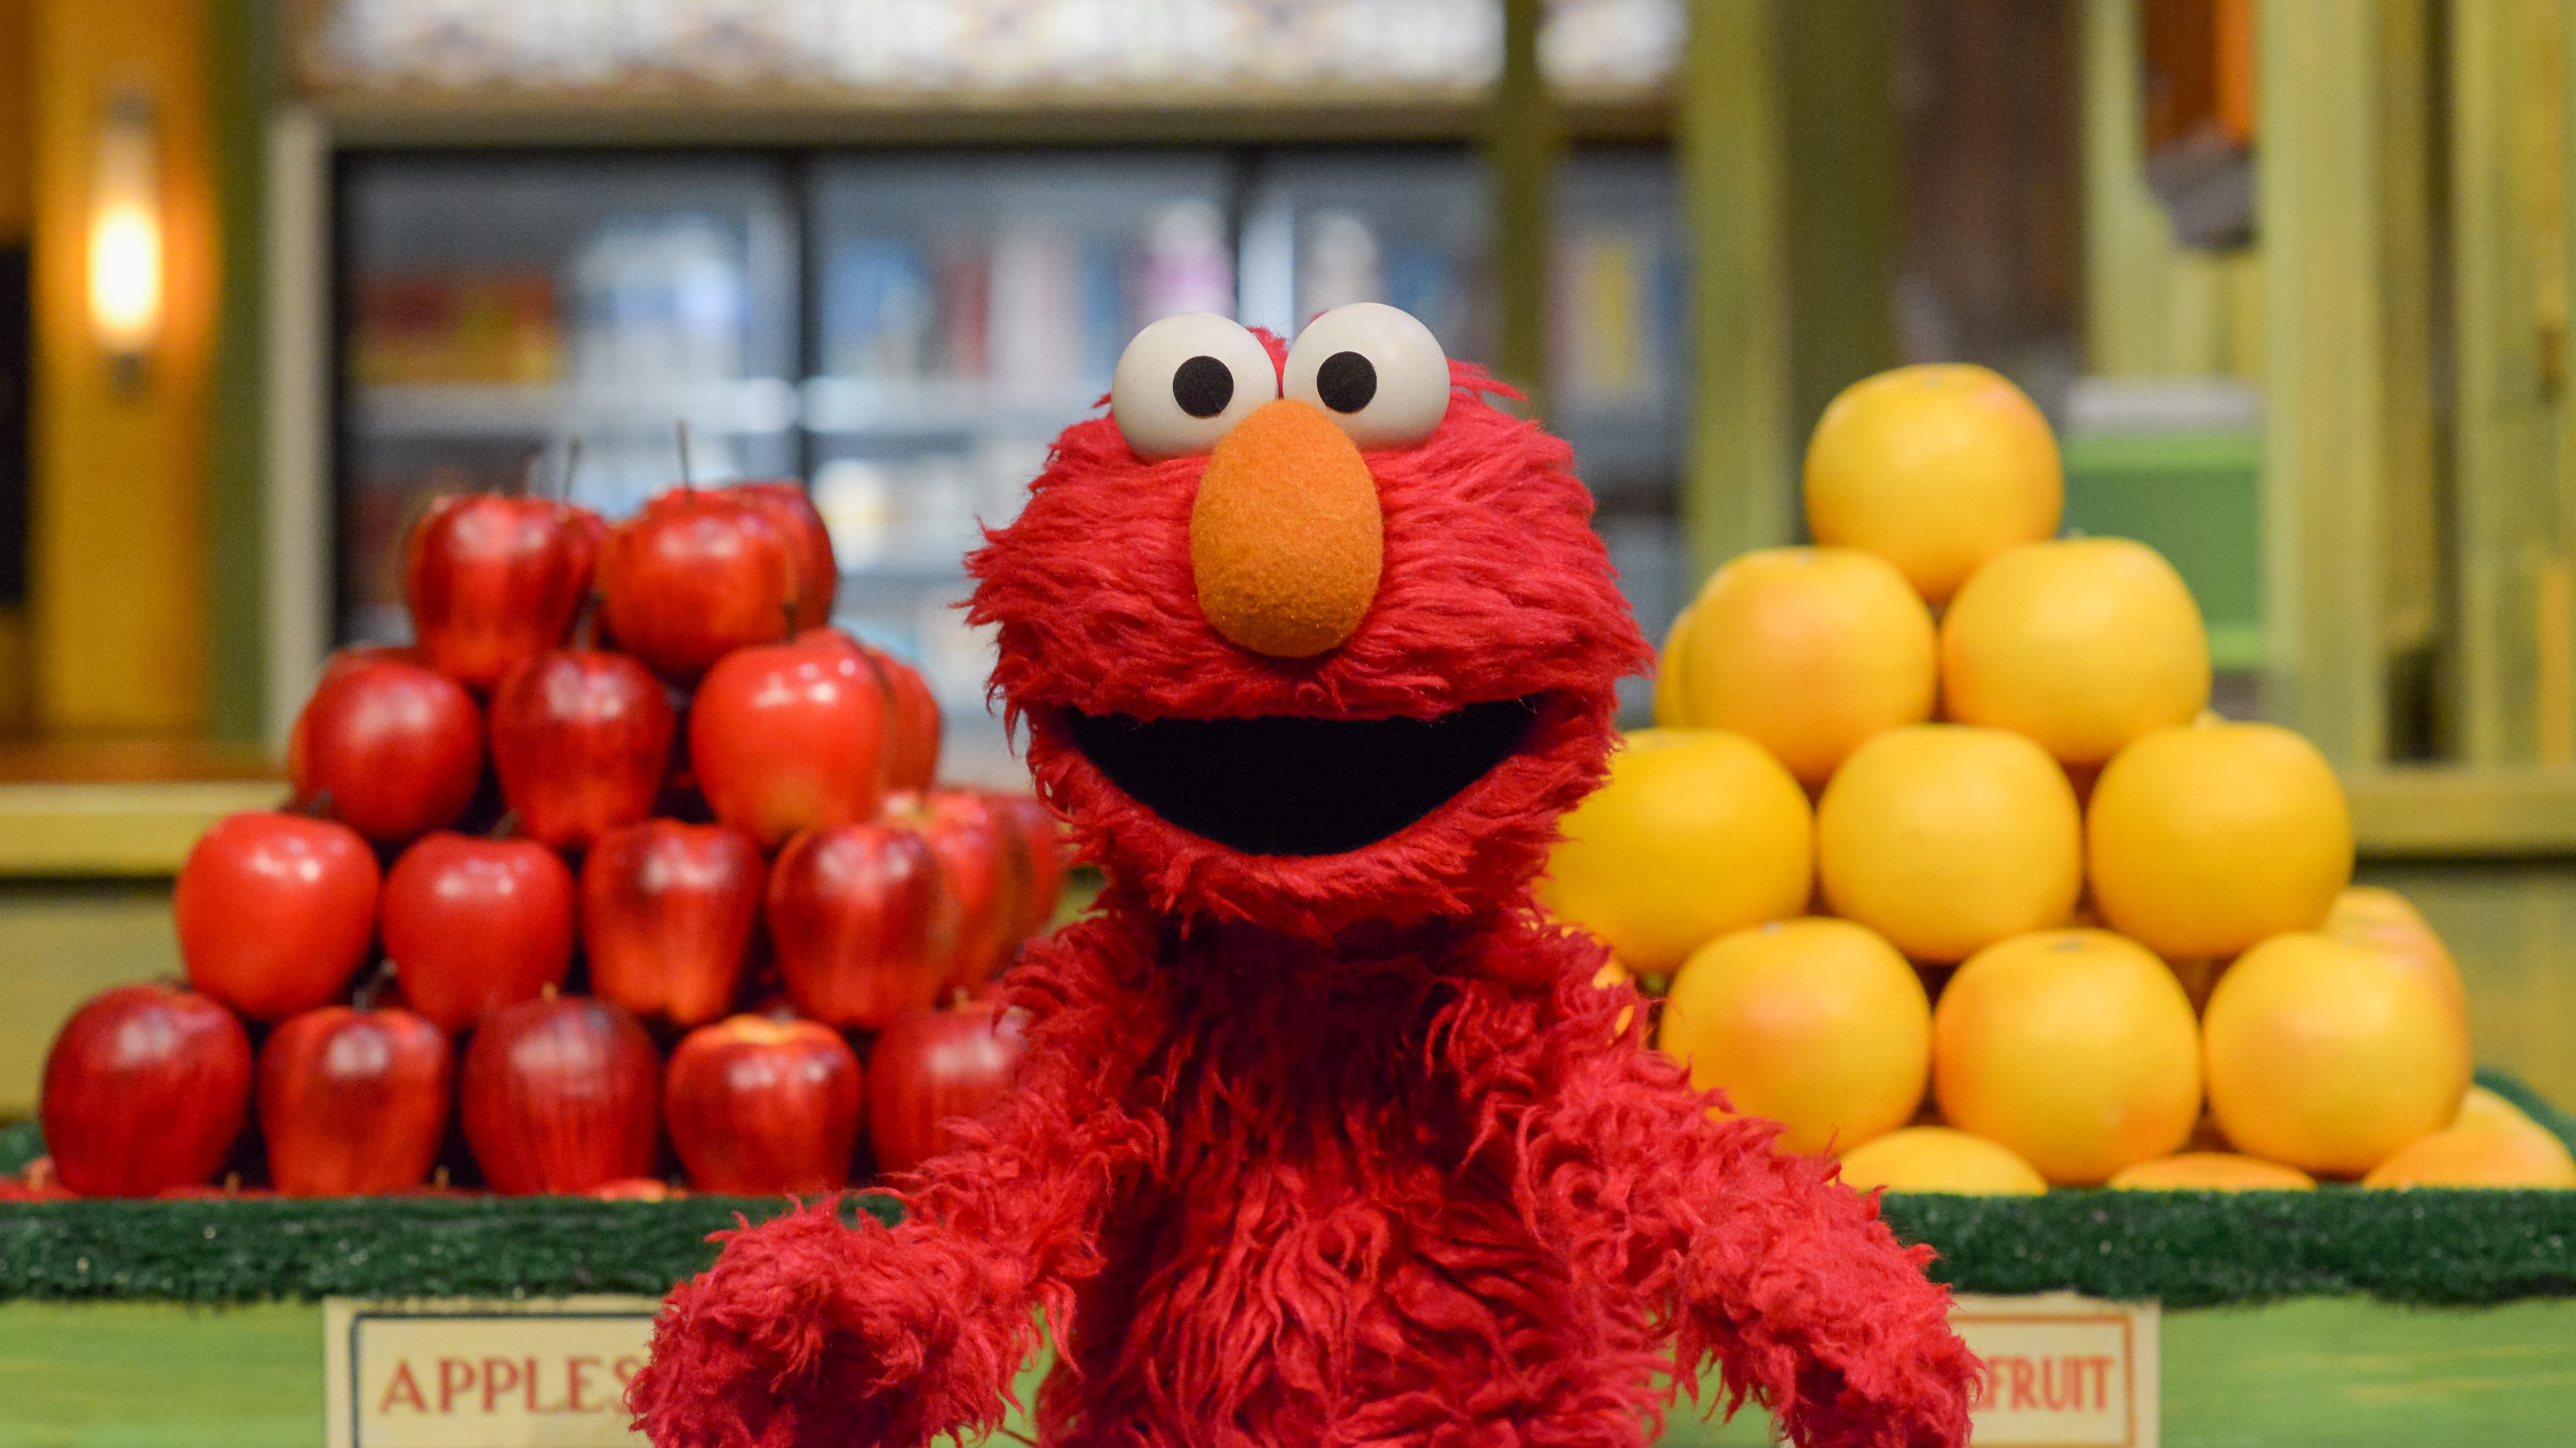 karton Ære ulæselig Elmo on Twitter: "Grownups say, "an apple a day, keeps the doctor away,"  but Elmo loves fruit so Elmo will have an orange too! Ha ha ha!  https://t.co/YeQt6CmsLw" / Twitter